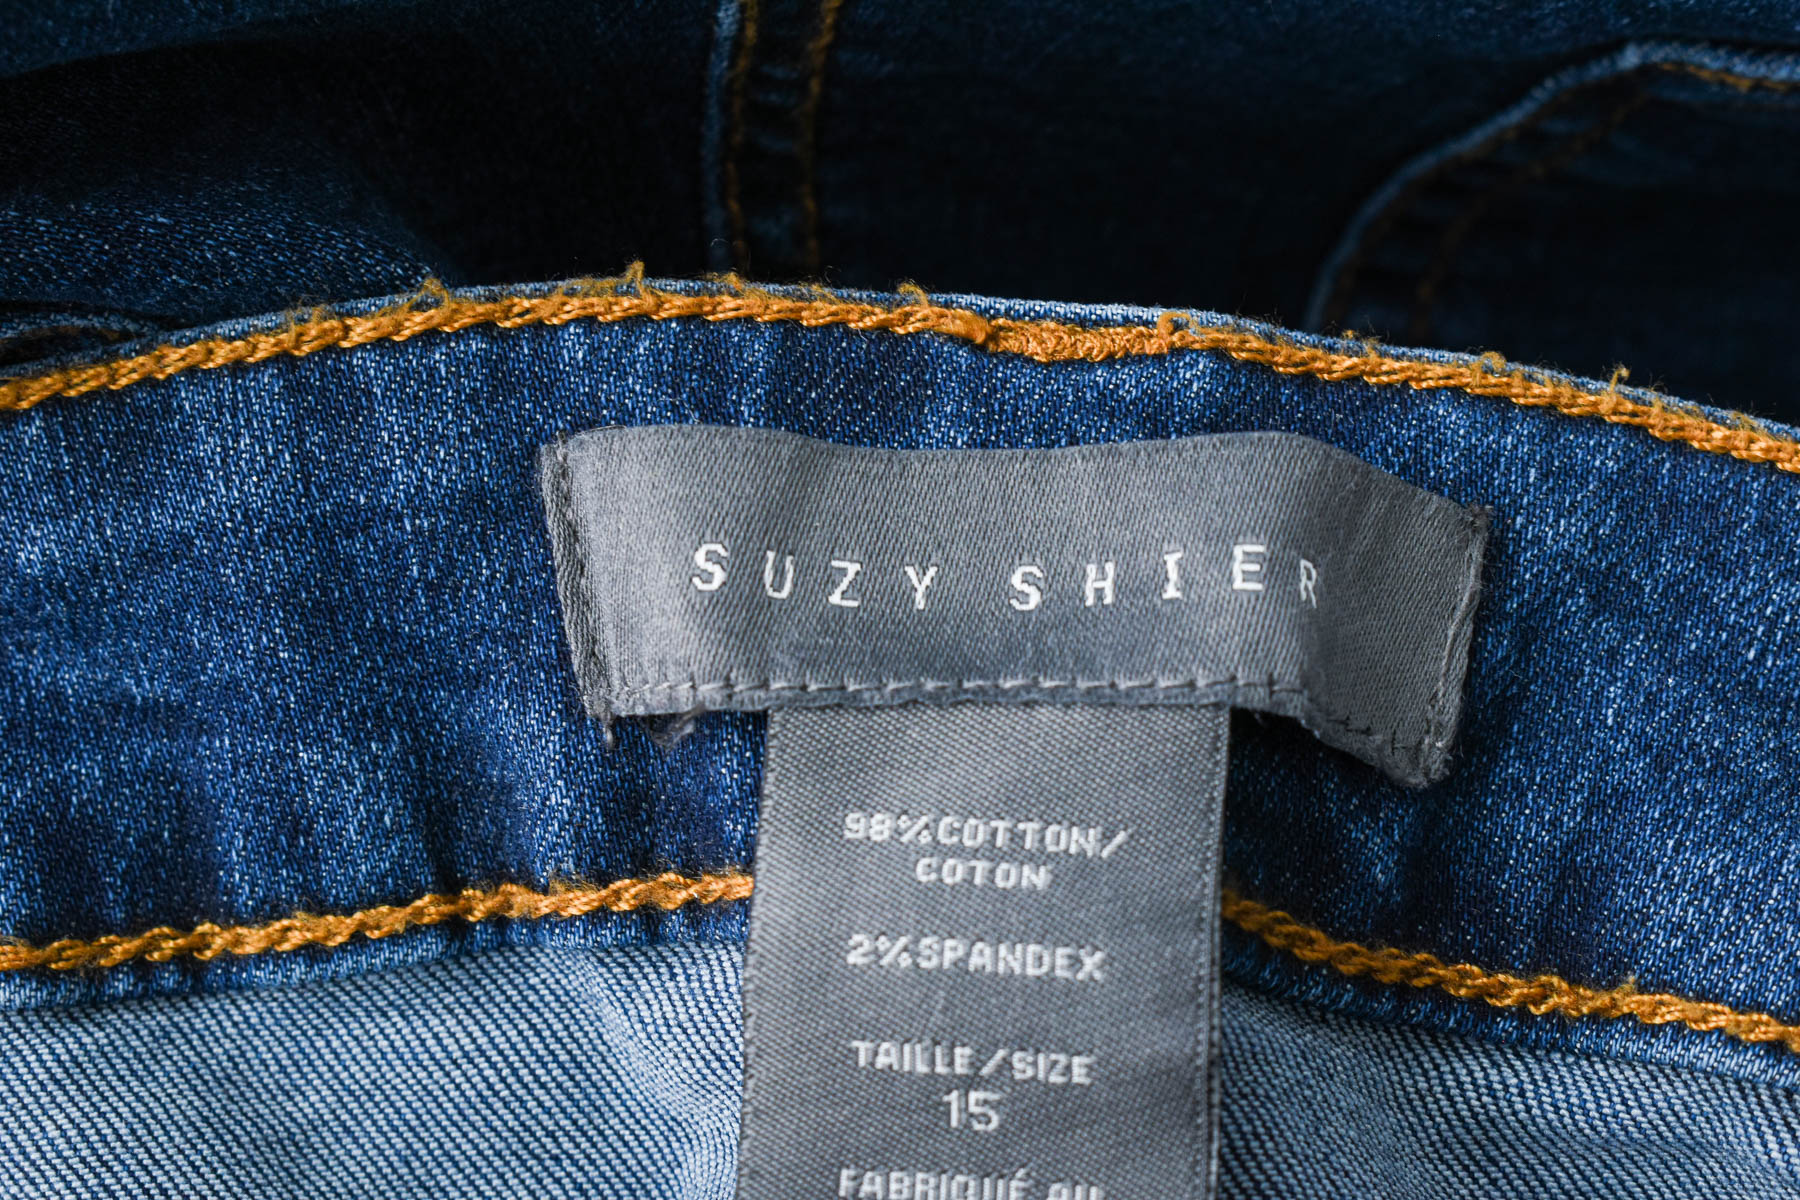 Women's jeans - Suzy Shier - 2